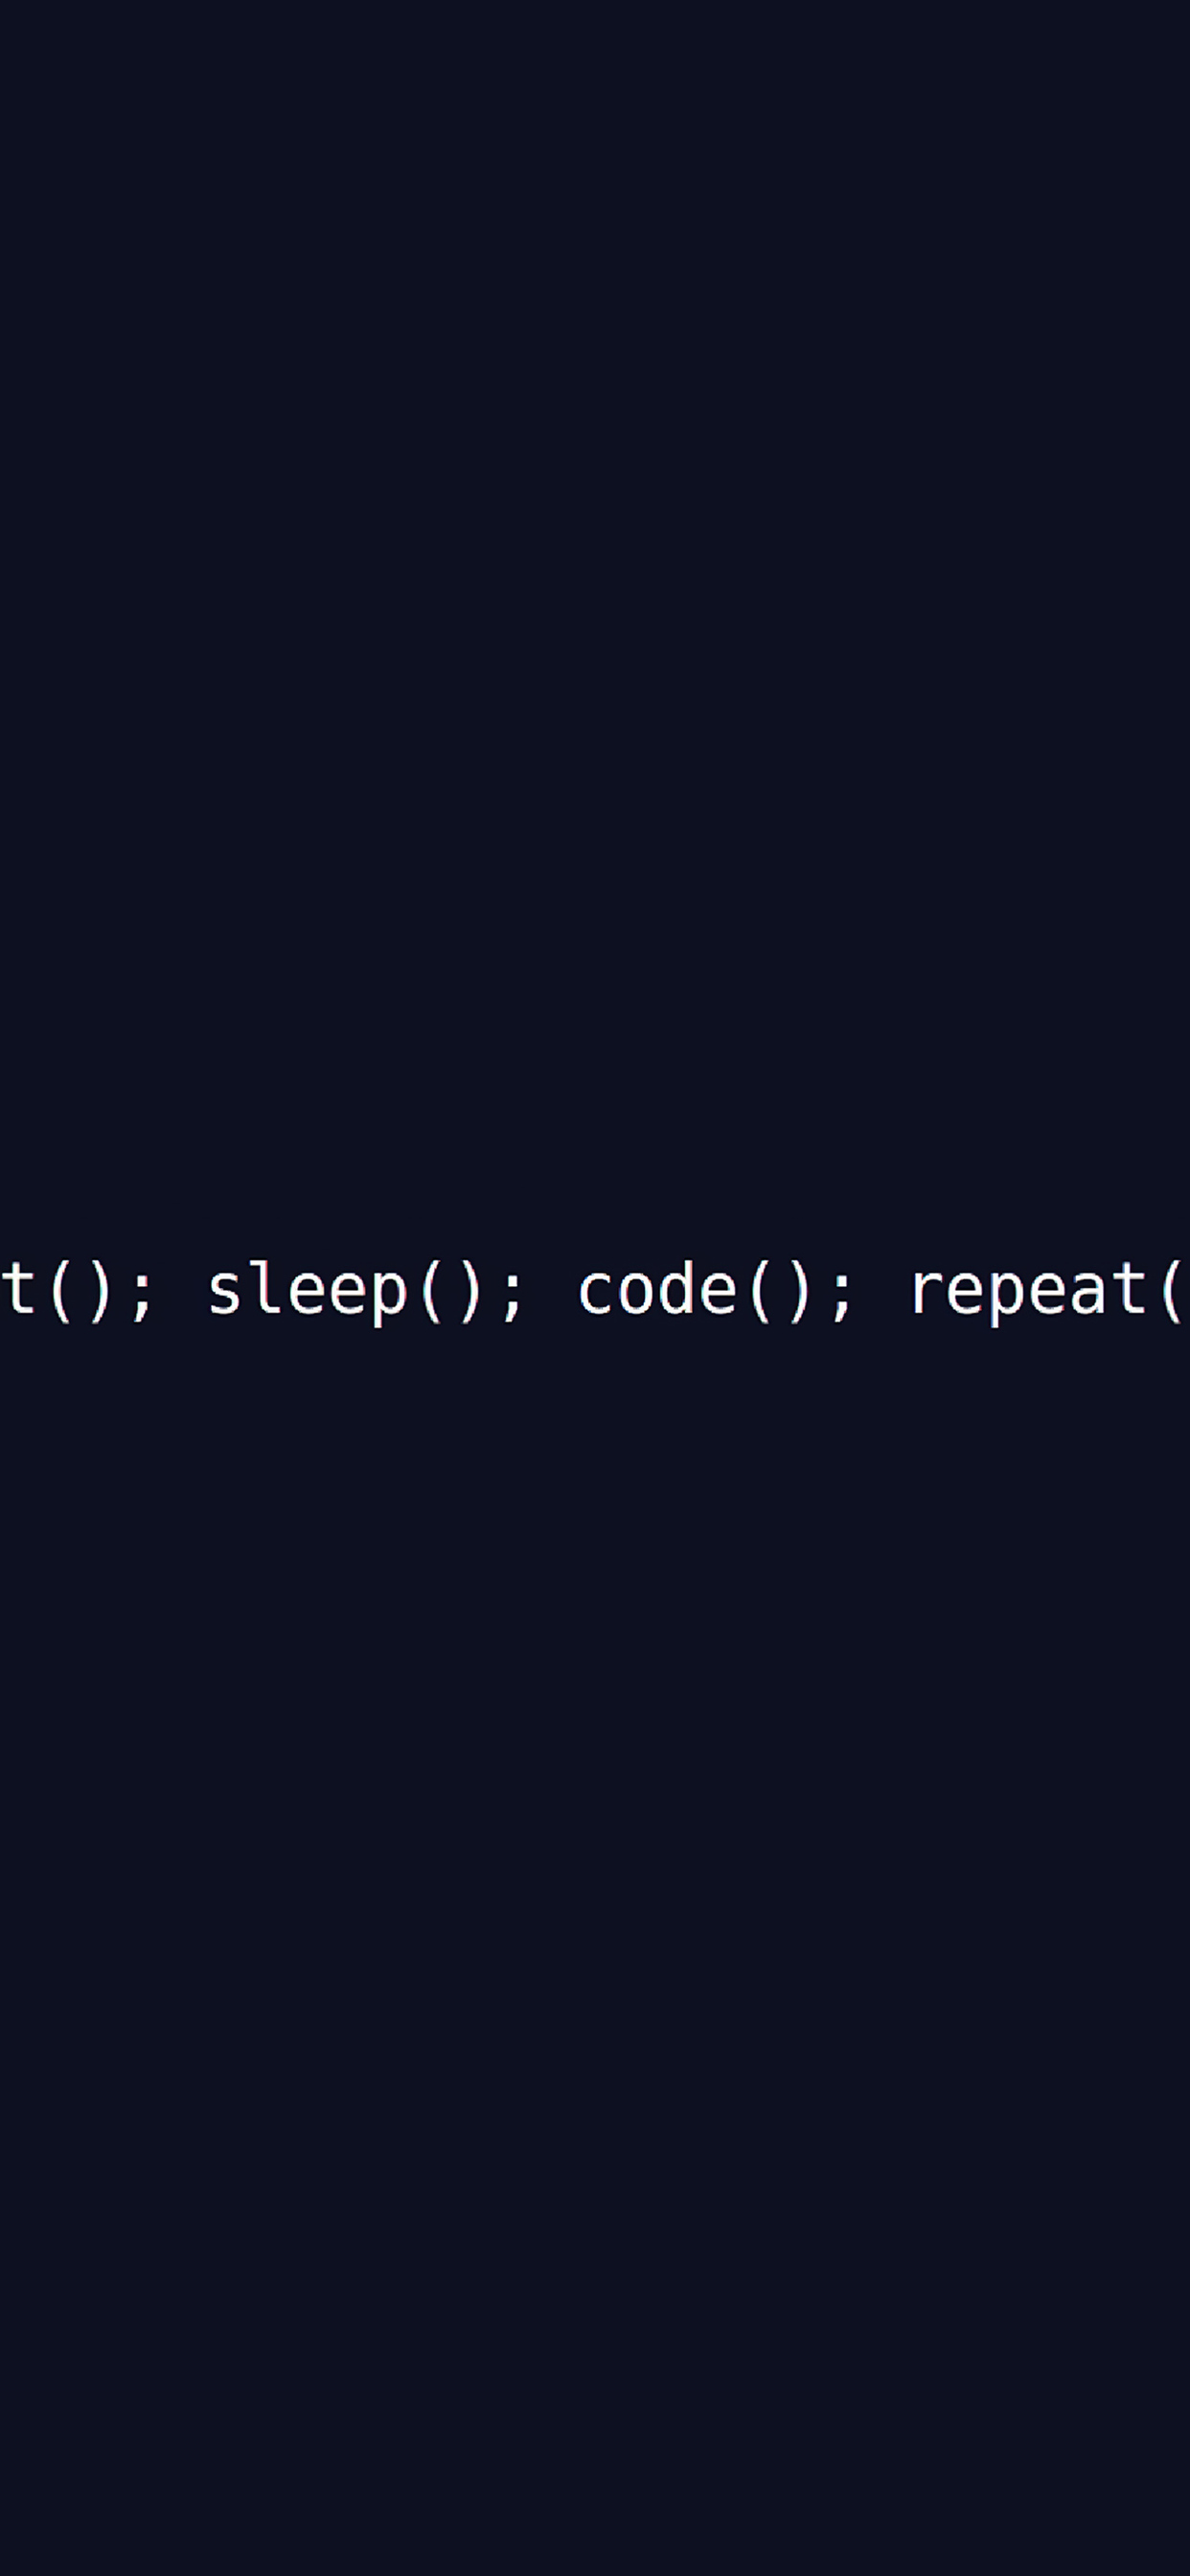 eat-sleep-code-repeat-5k-1i.jpg